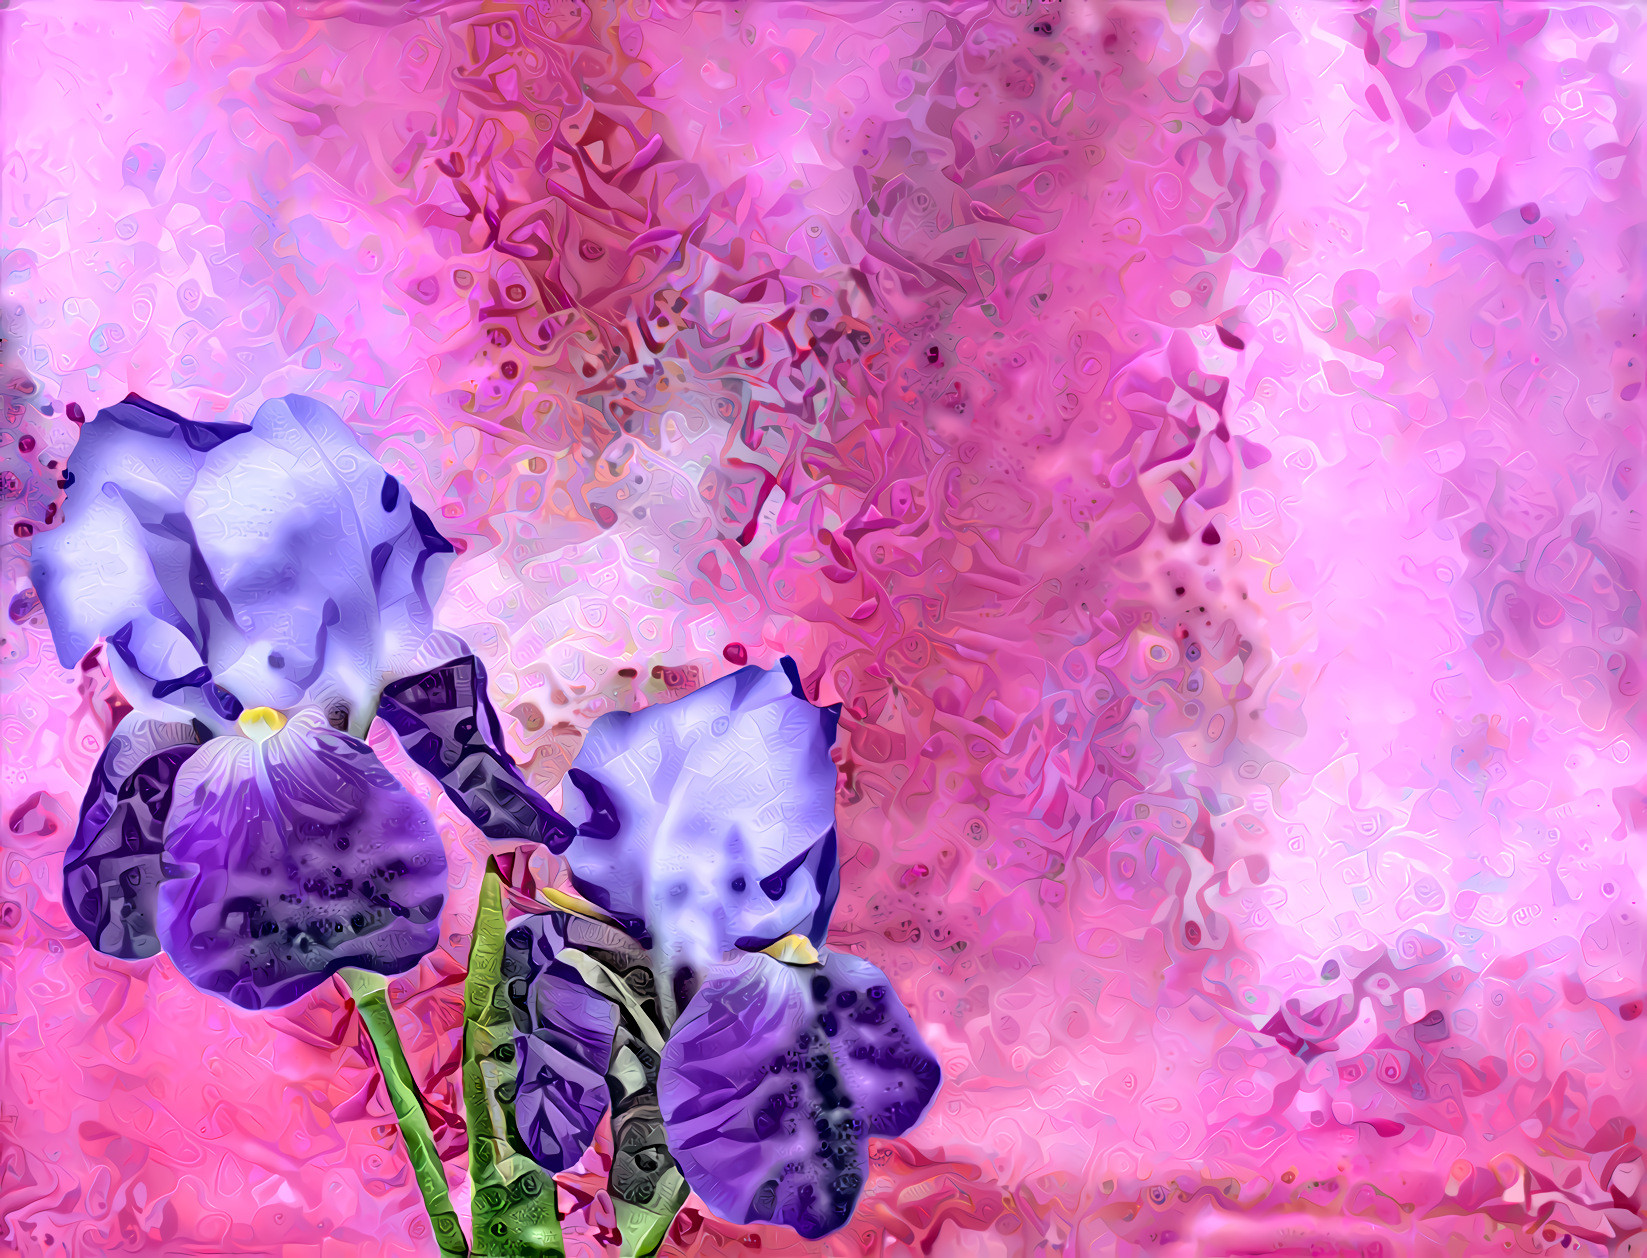 Deep purple Iris in a Pink Dream